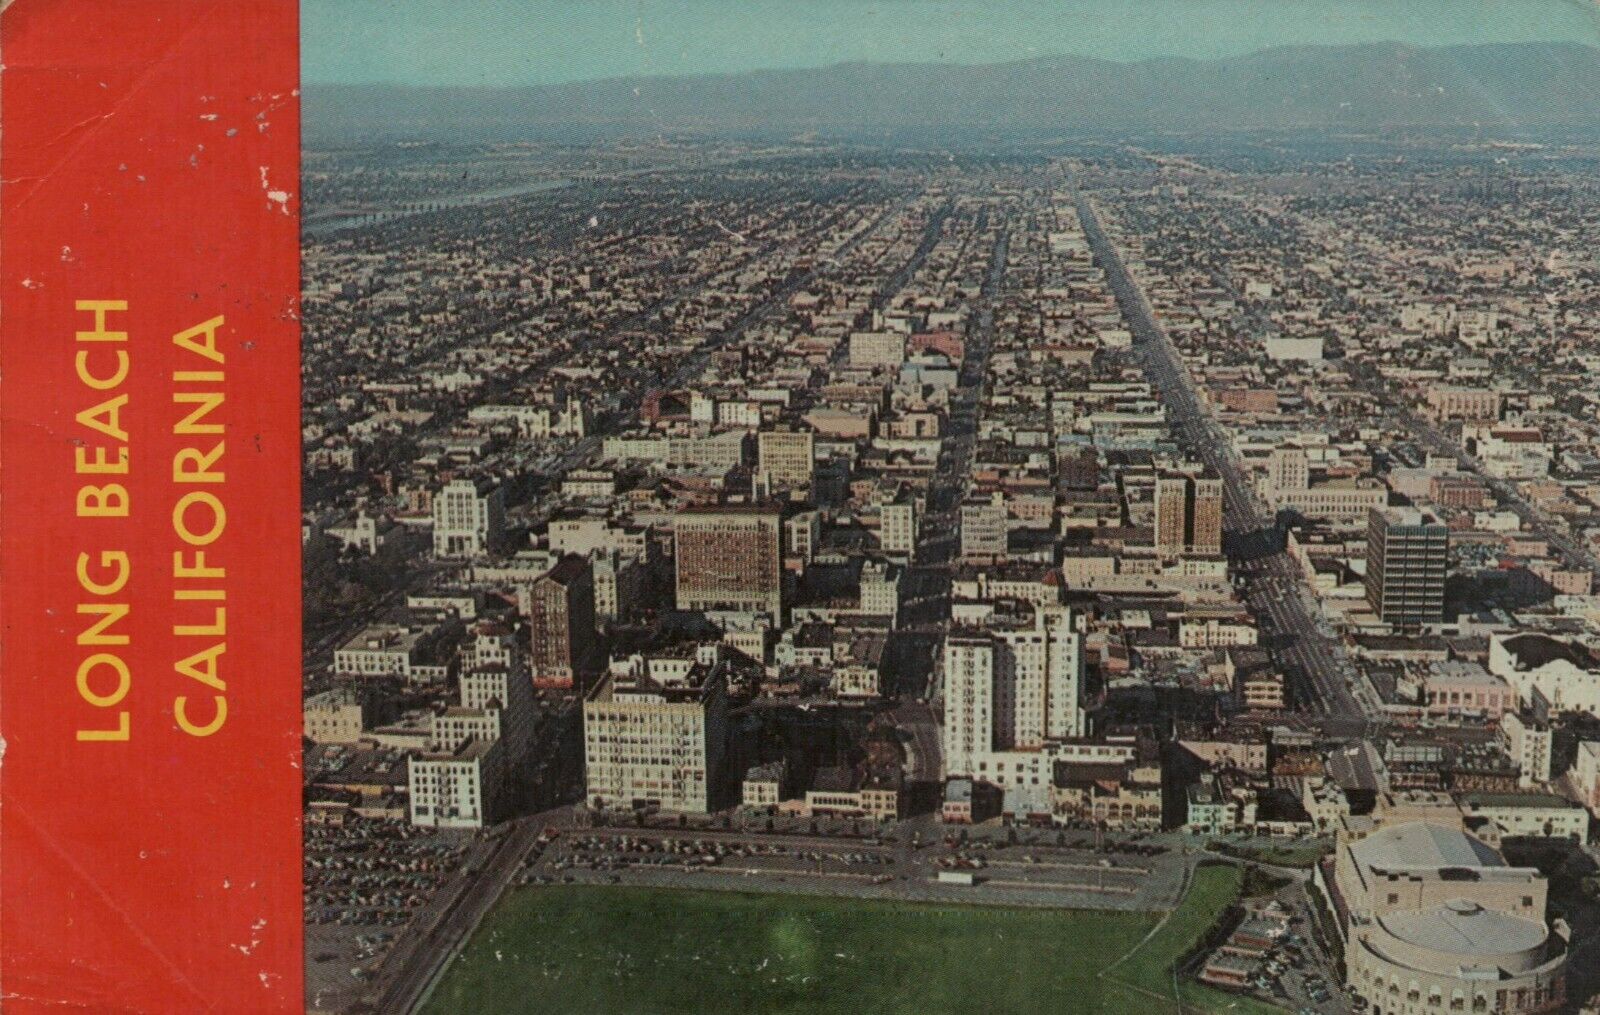  Vtg Postcard Long Beach California Looking North Over Metropolitan Downtown 